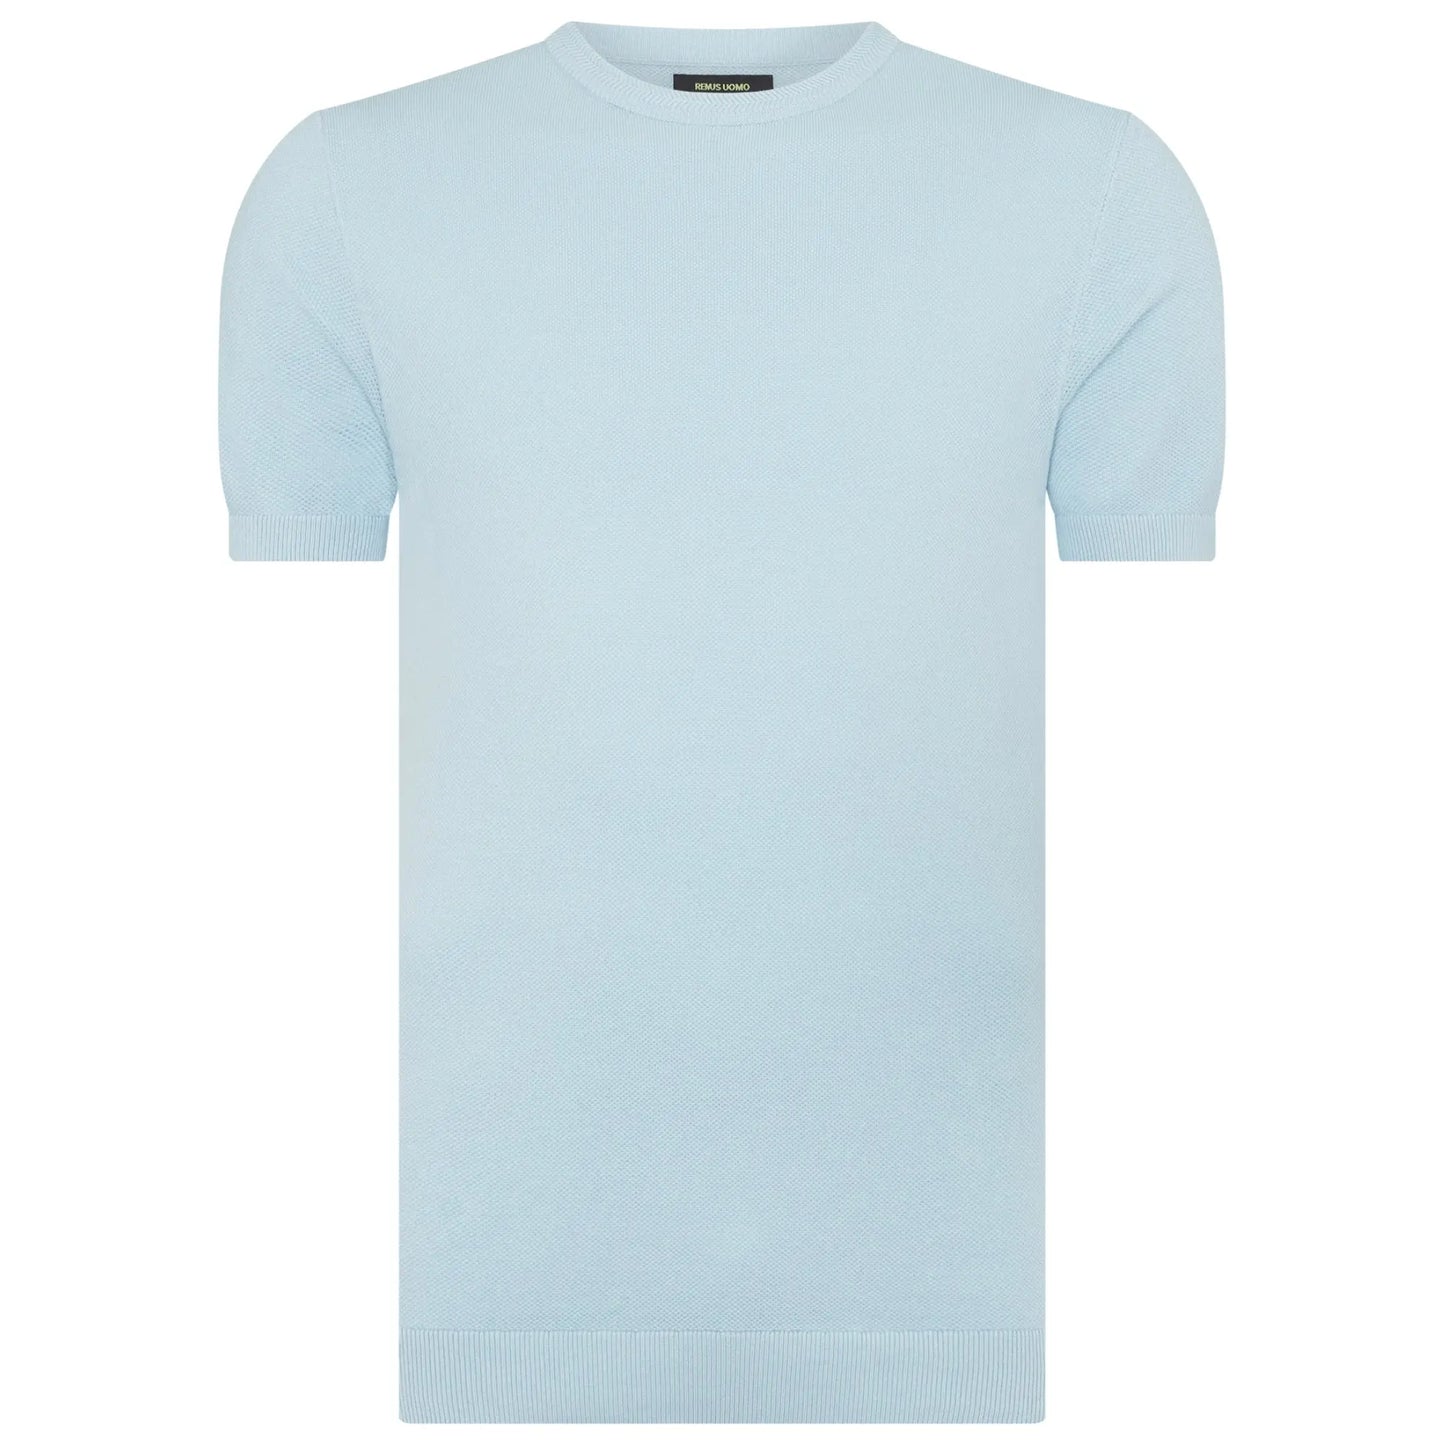 Buy Remus Uomo Textured Cotton T-Shirt - Sky Blue | T-Shirtss at Woven Durham